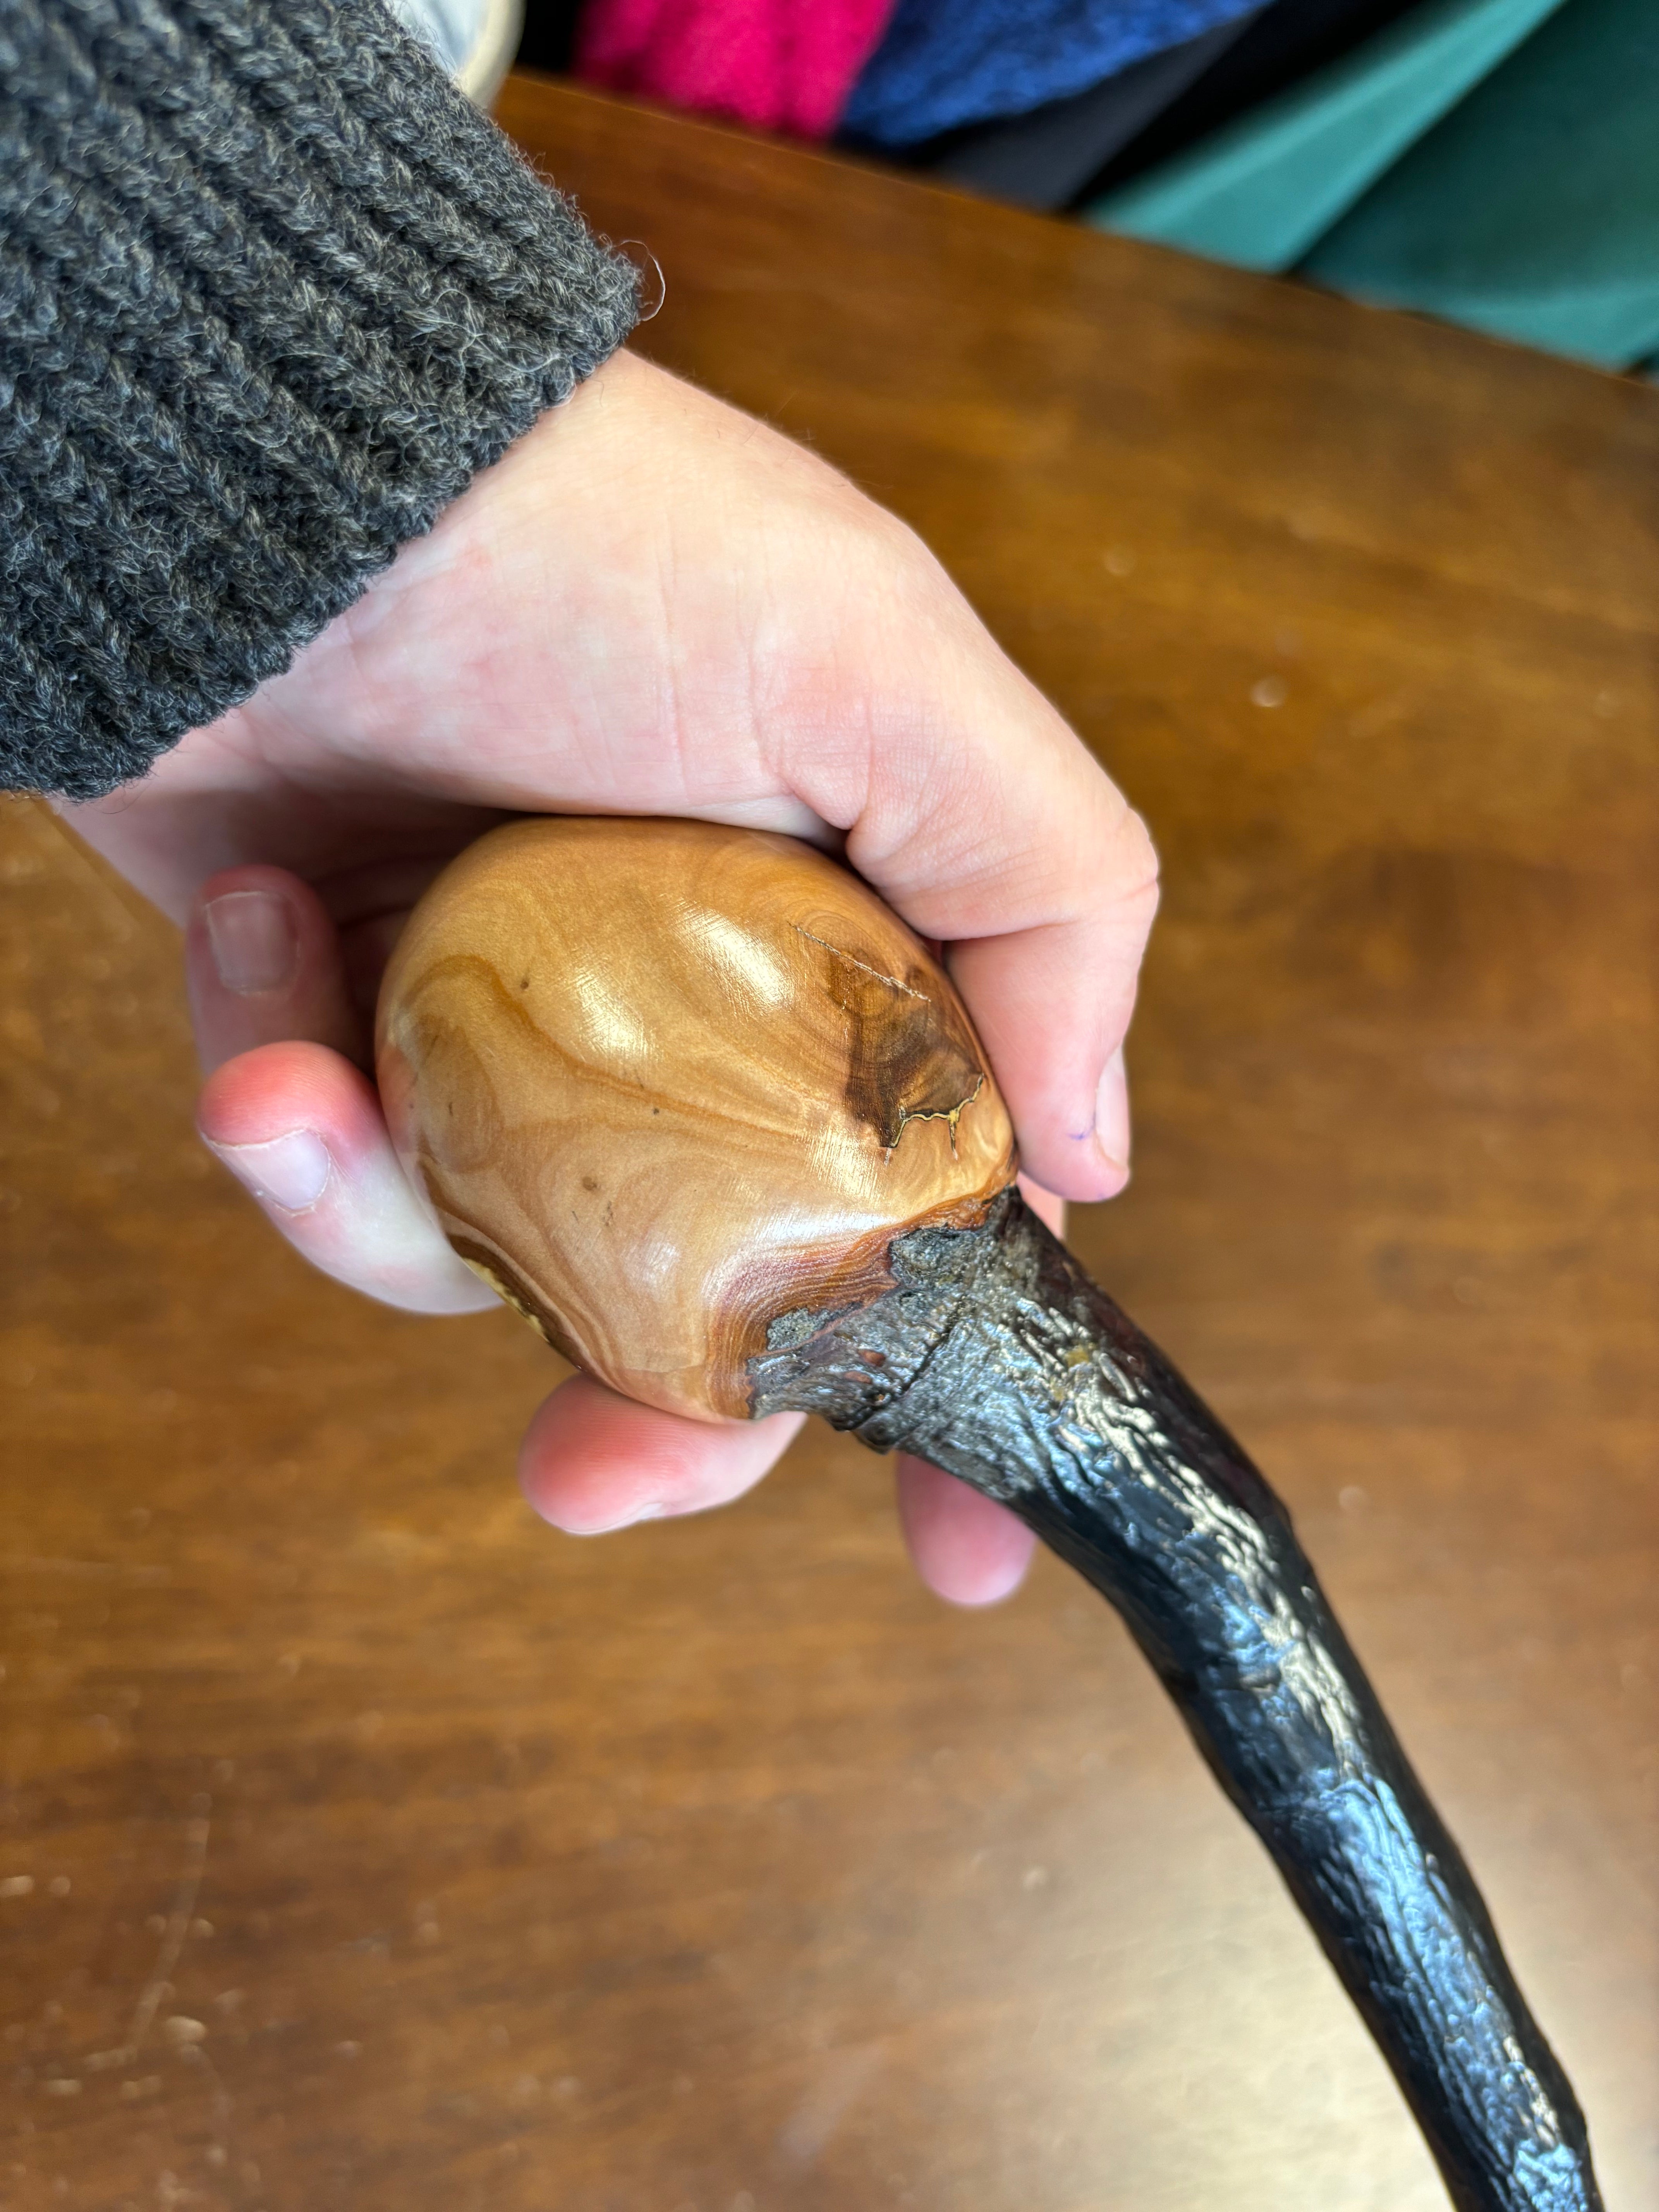 Blackthorn Walking Stick 31 1/2 inch  - Handmade in Ireland